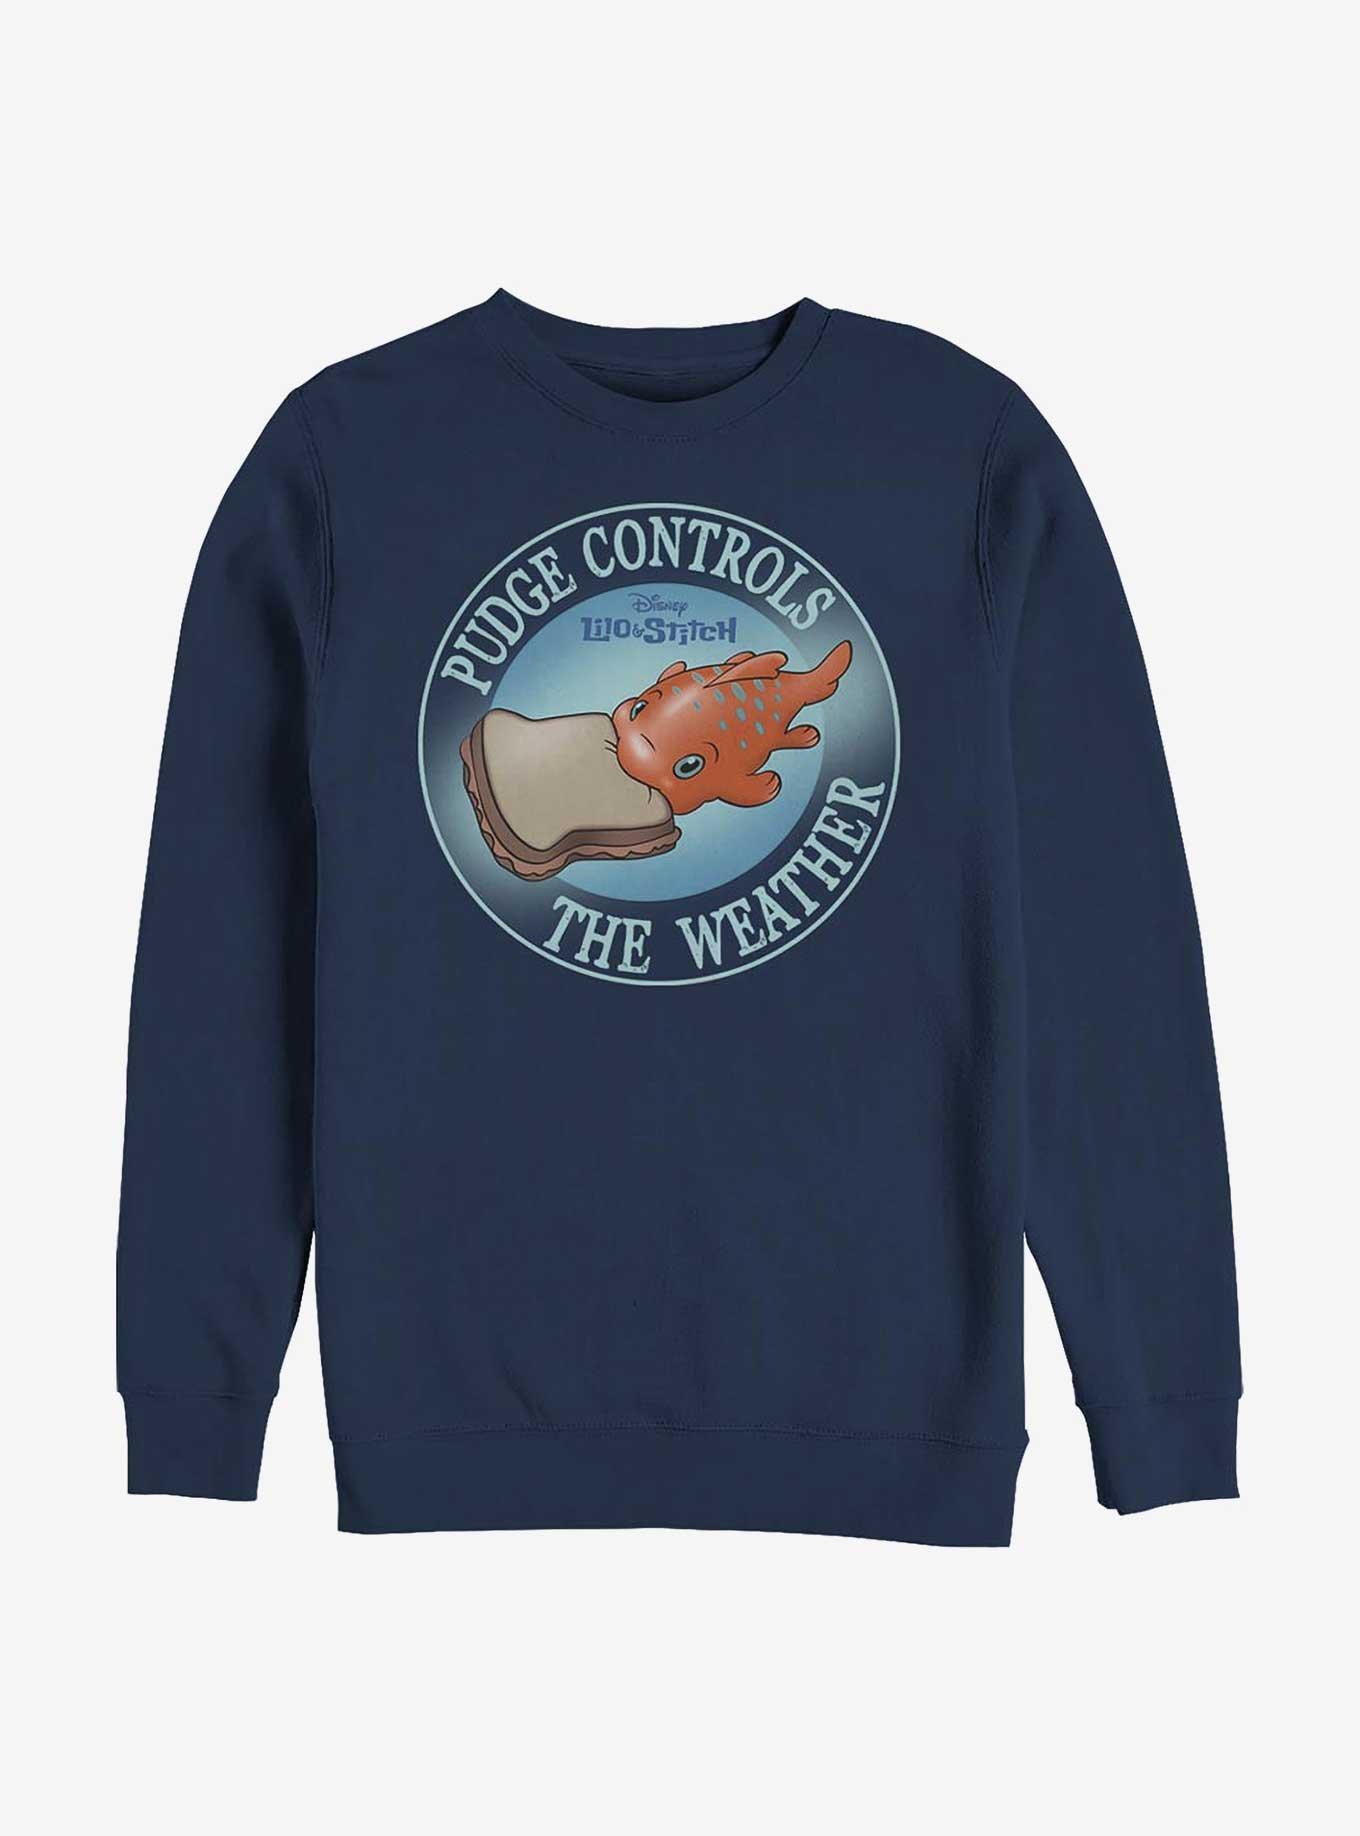 Disney Lilo & Stitch Pudge Controls The Weather Crew Sweatshirt